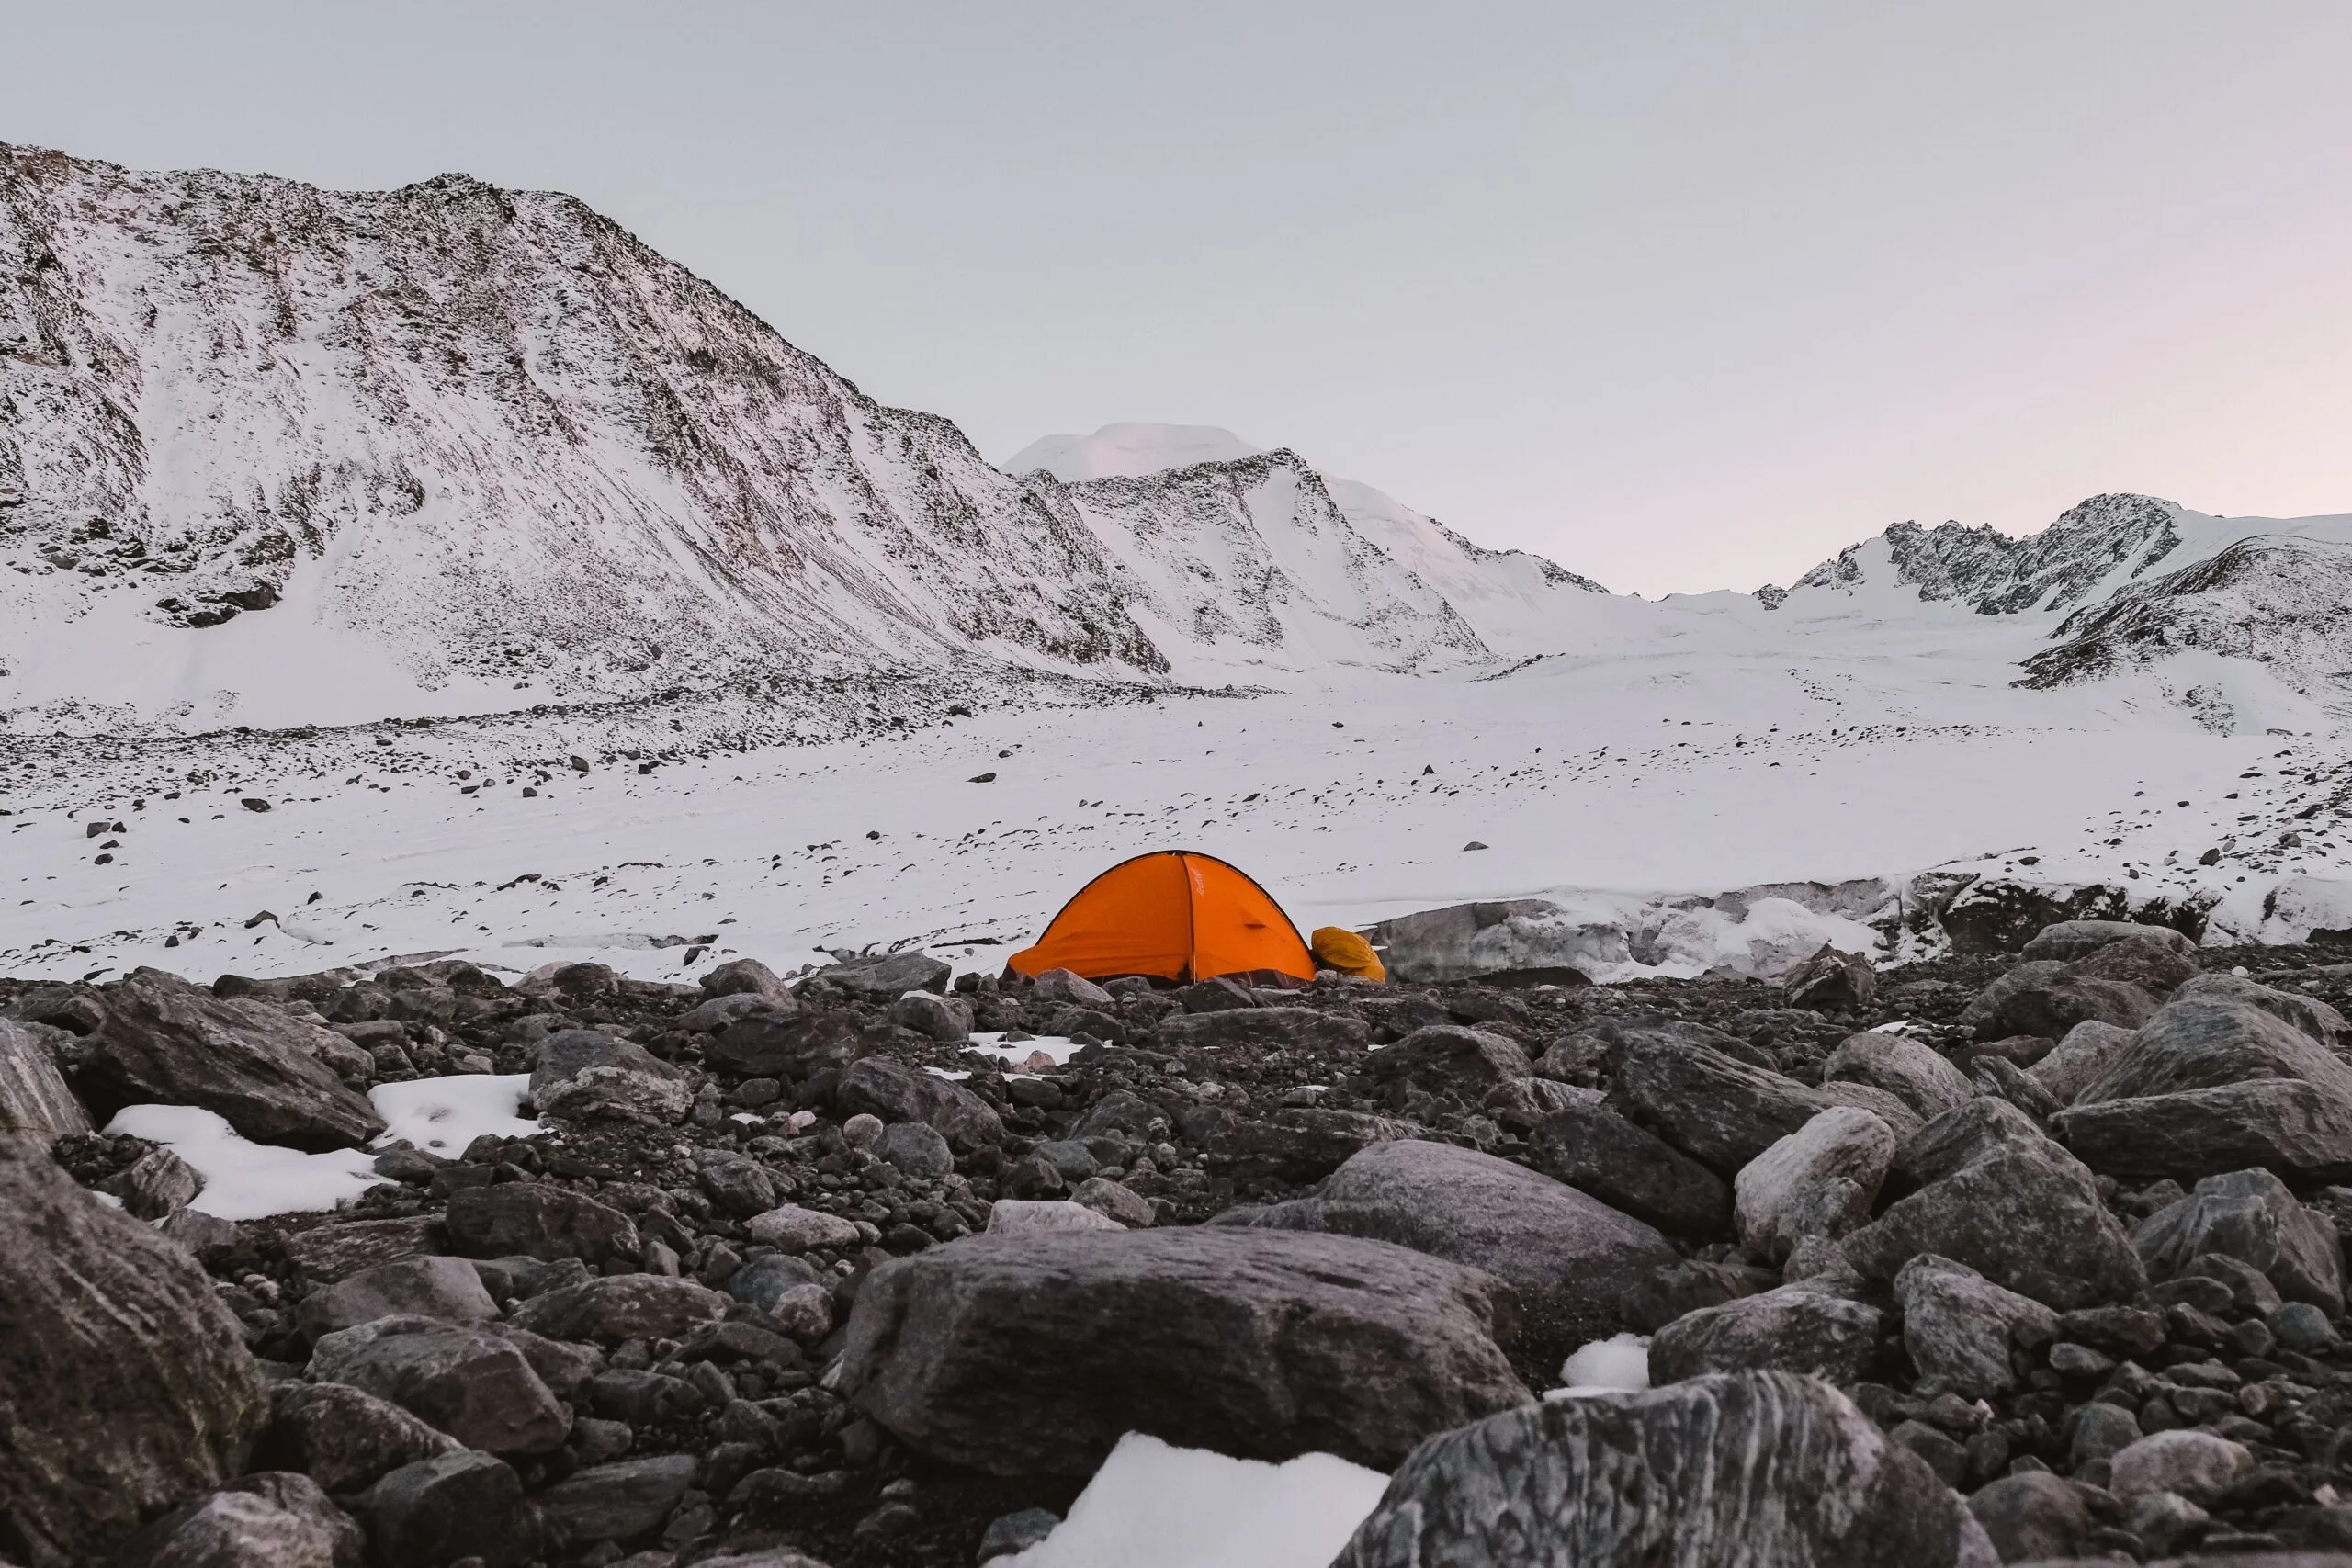 Orange tent in snowy mountain area